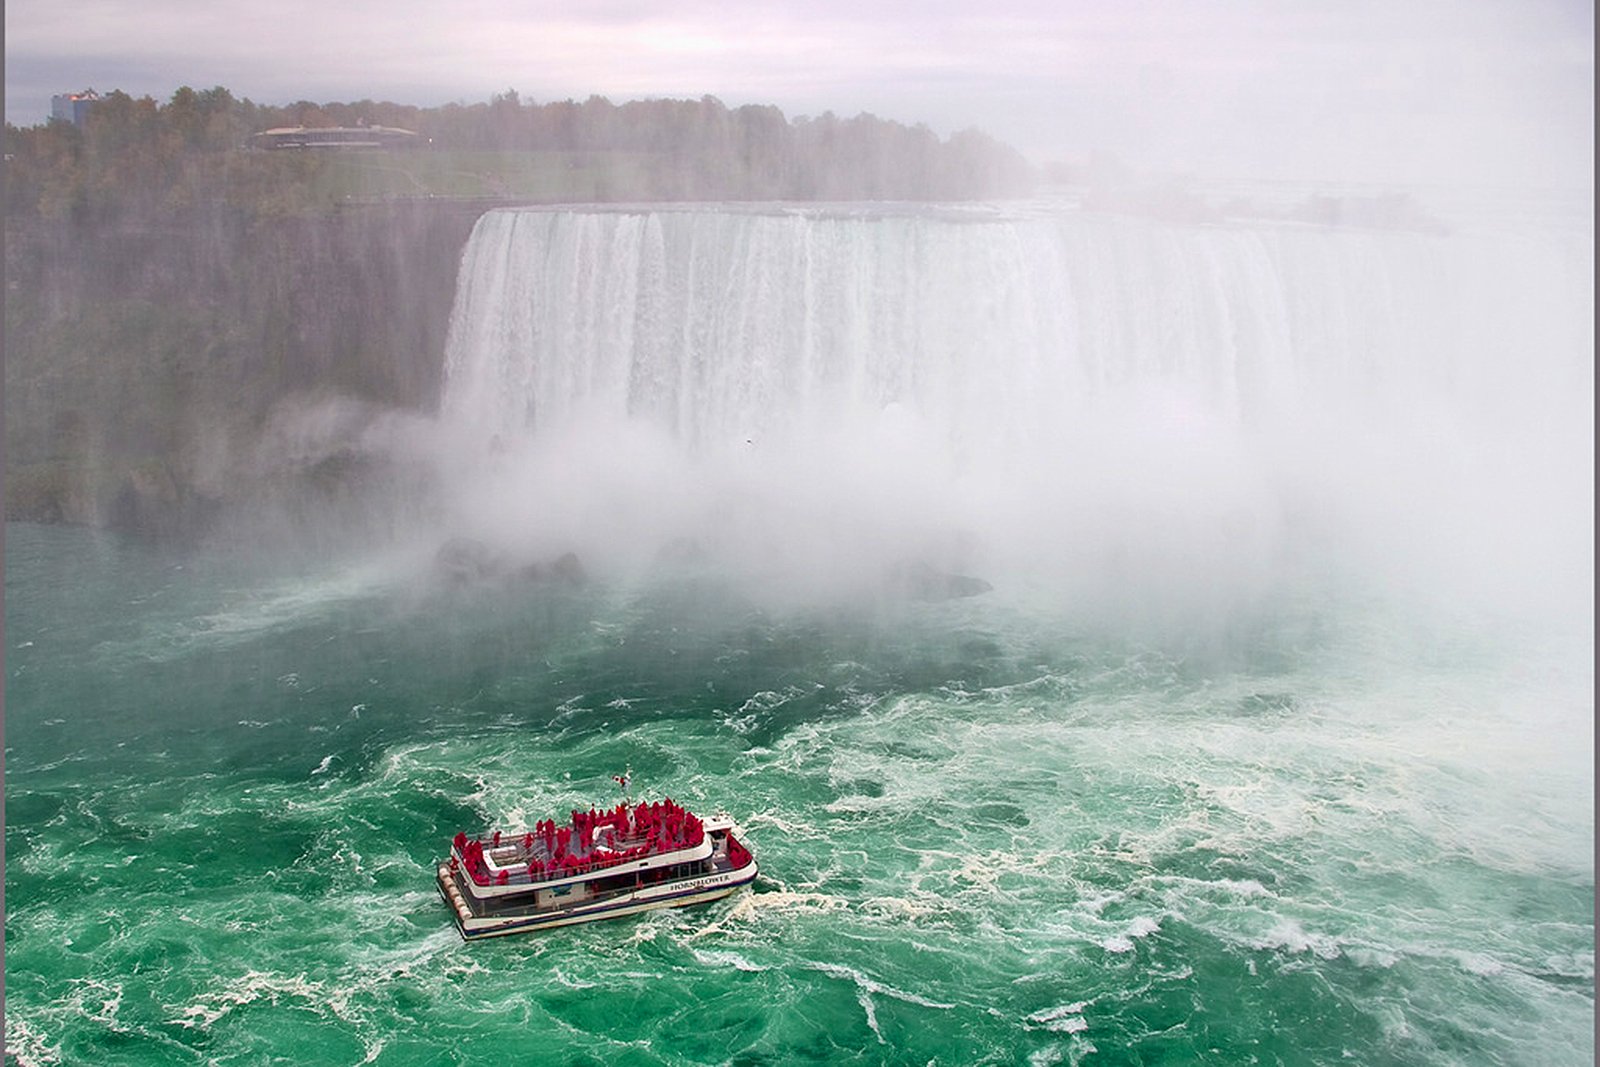 How to take a boat to Niagara Falls in Toronto